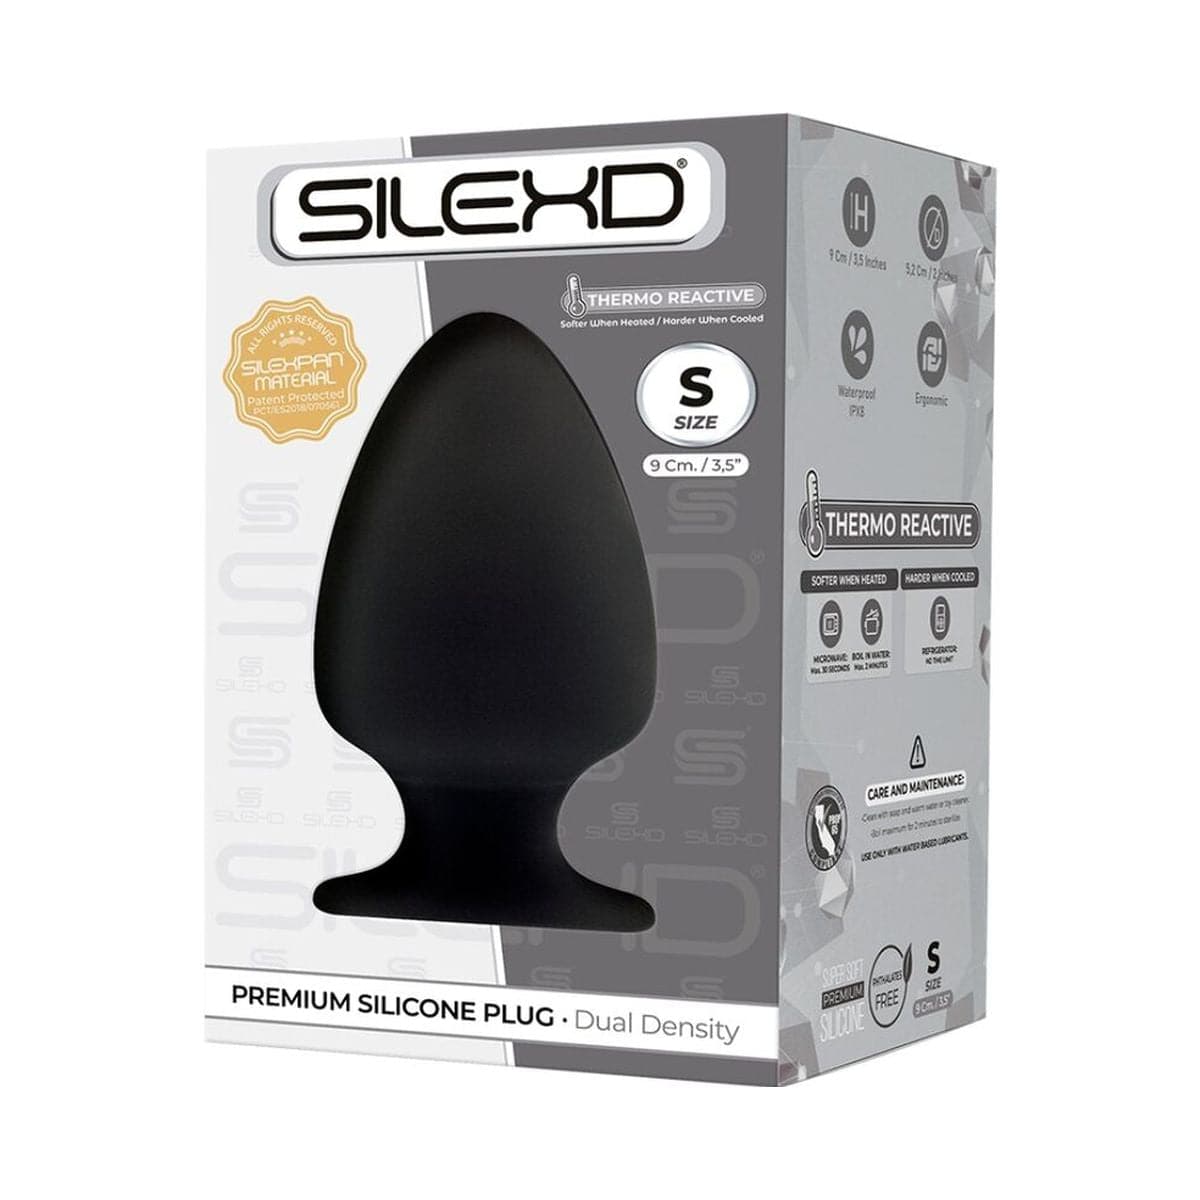 Plug Anal Silexd 1 Premium Silicone S, 9cm Ø5.2cm